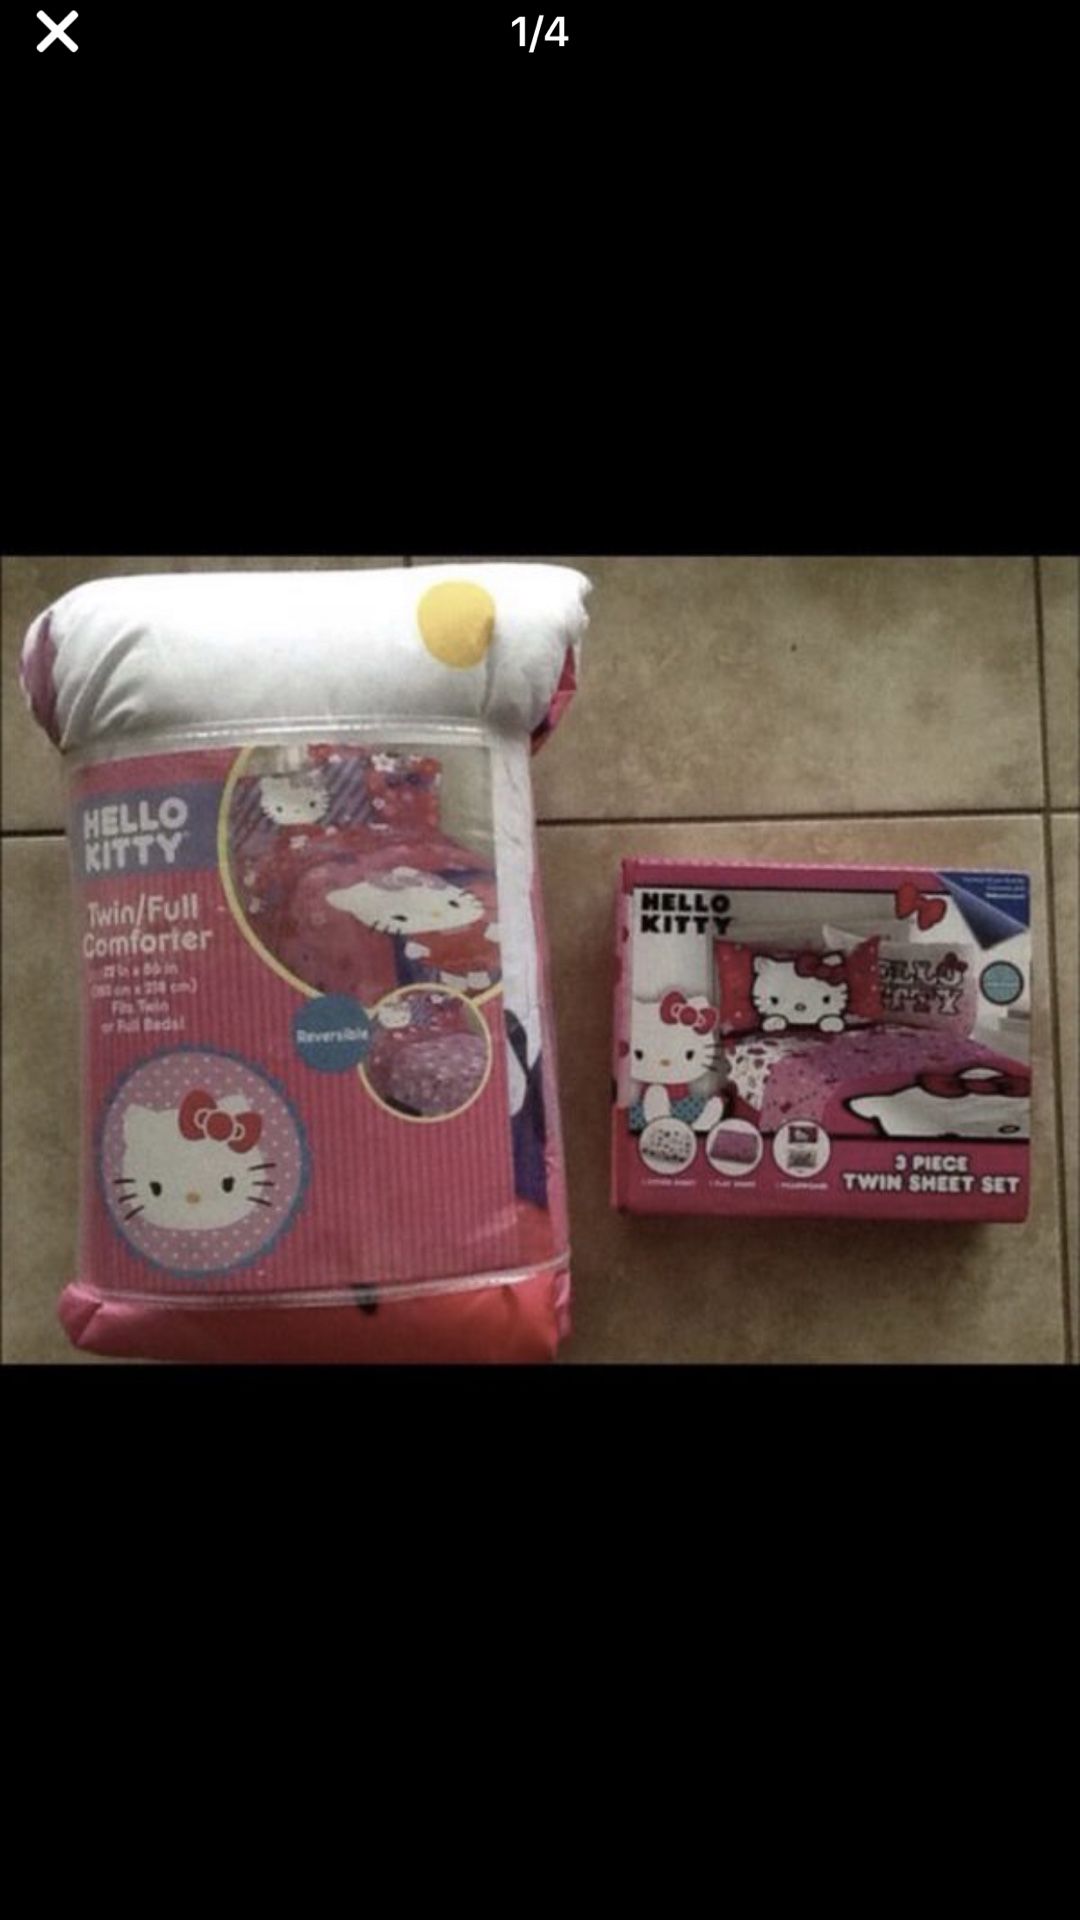 New Hello Kitty Twin/Full Comforter and Matching Sheet set